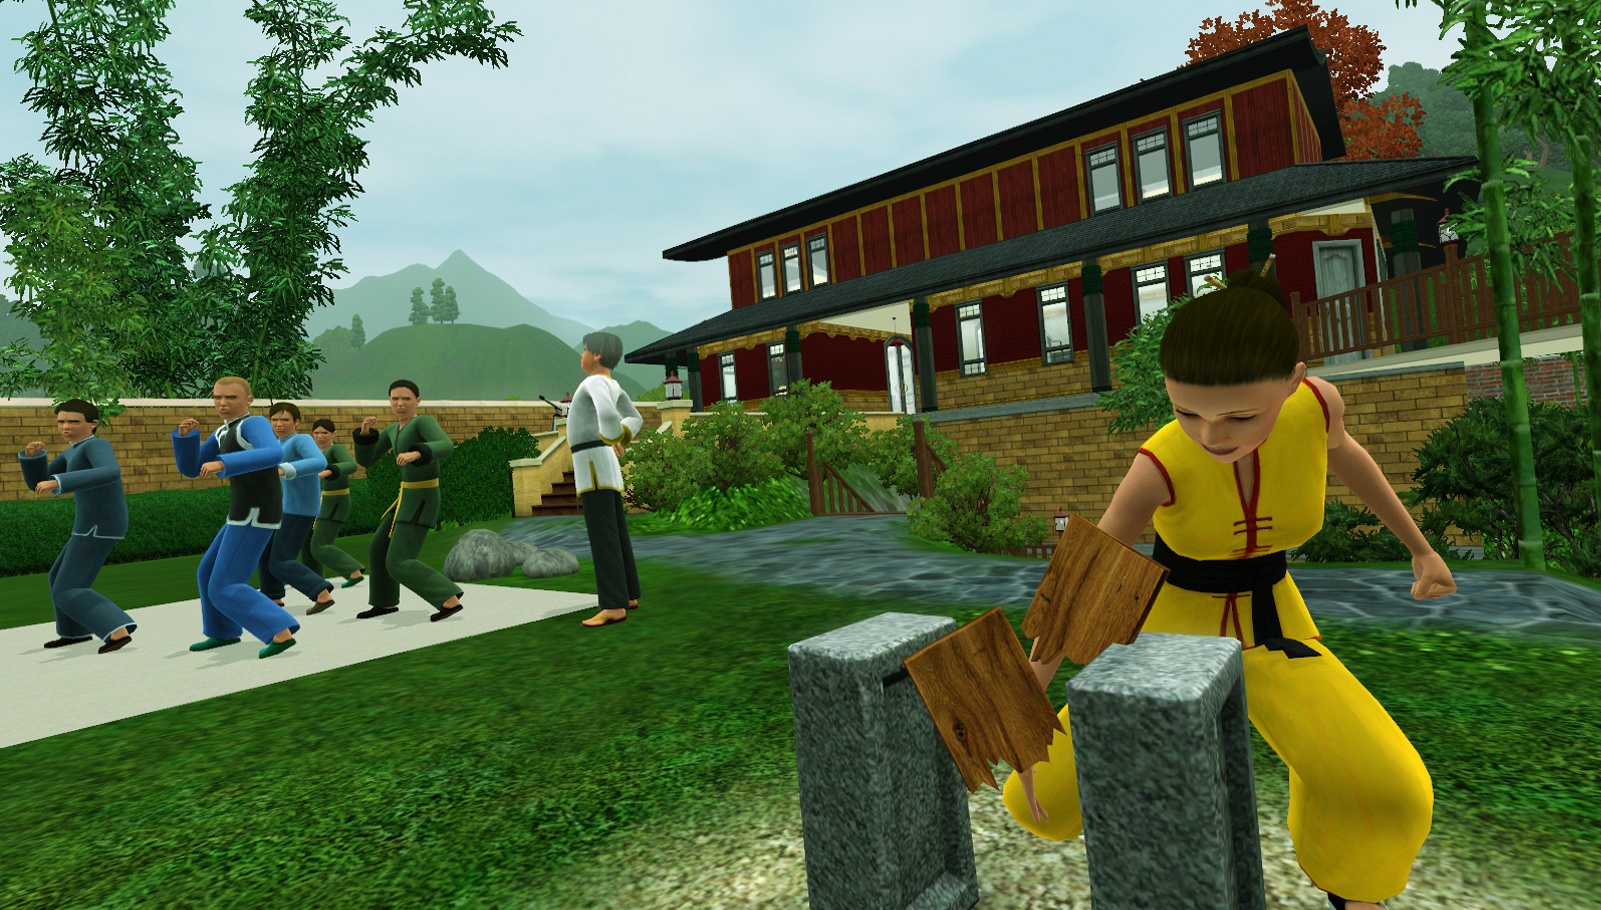 Sims 3 worlds. The SIMS 3 мир приключений. The SIMS 3 Adventures. Города мир приключений симс 3. SIMS 3 дополнение мир приключений.